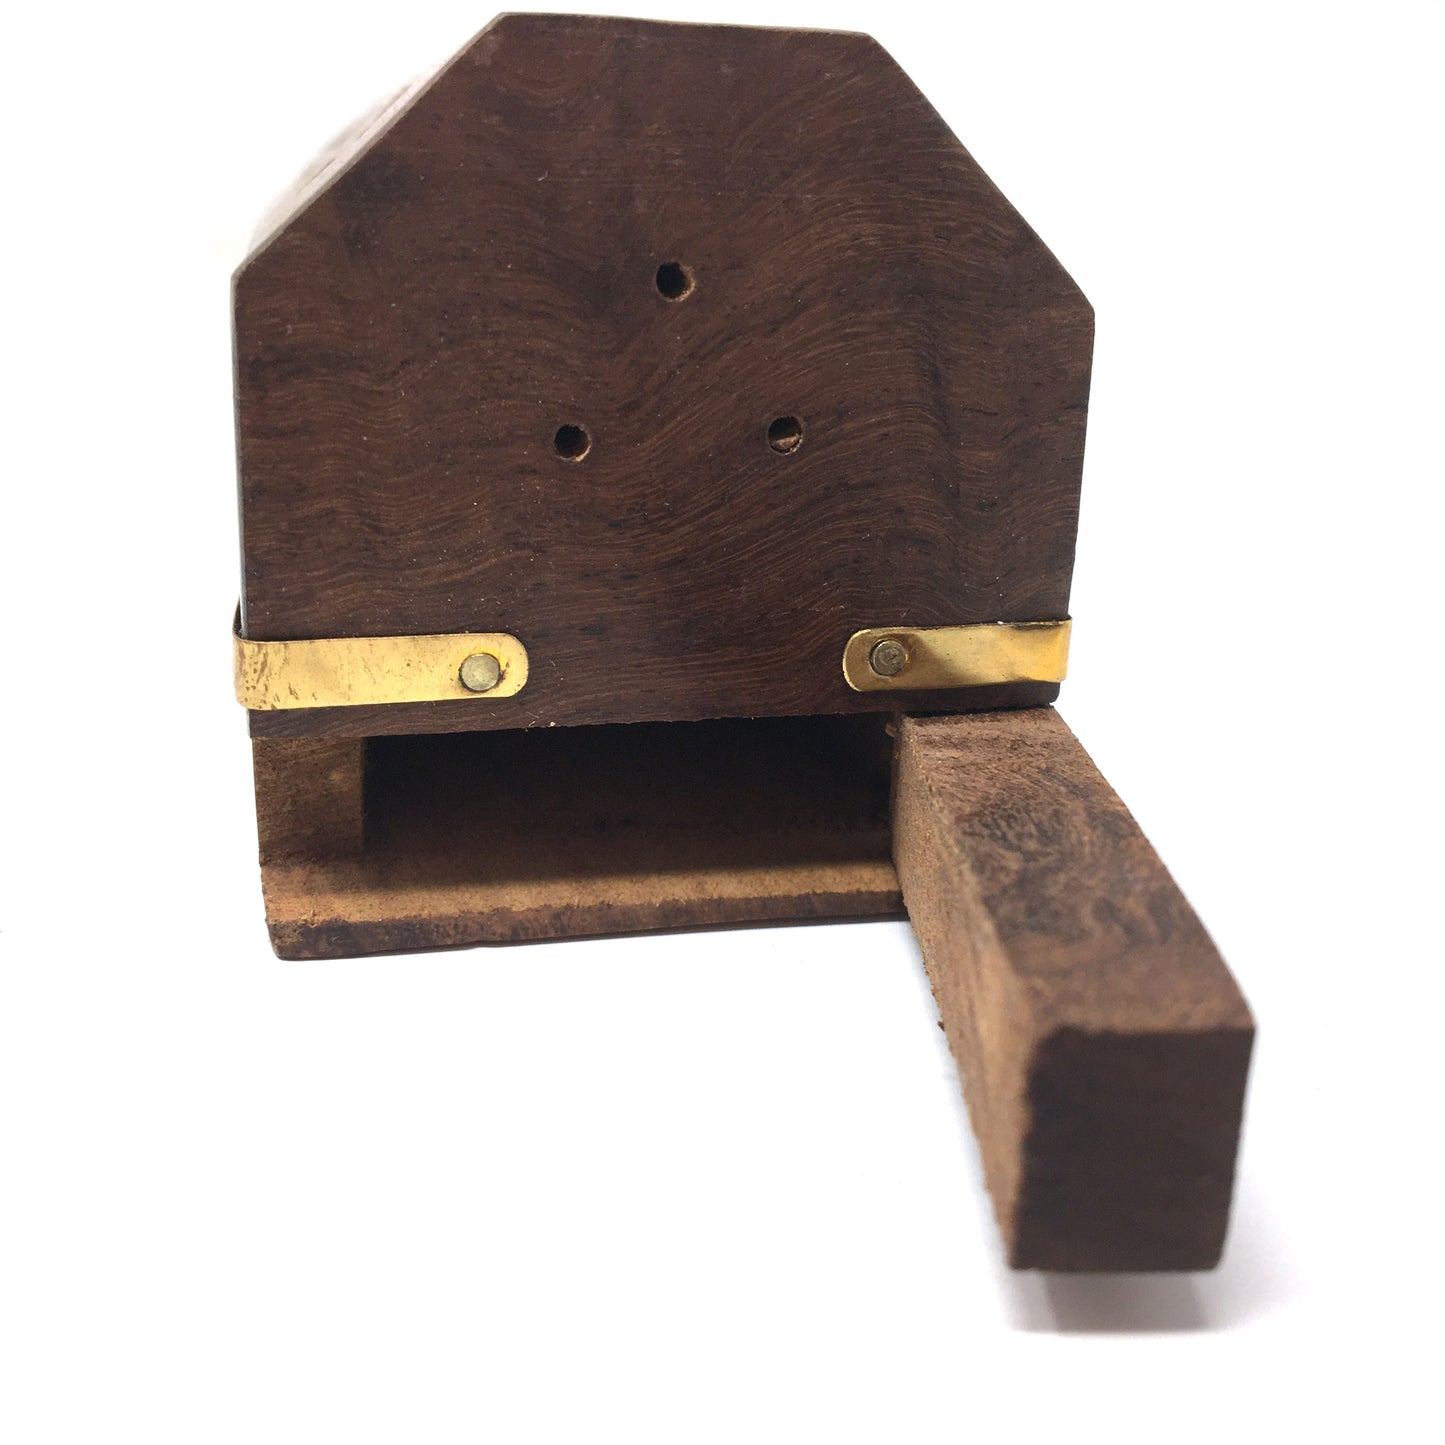 Handmade Incense Burner - Wooden Box With Storage - Decorative Brass Inlays